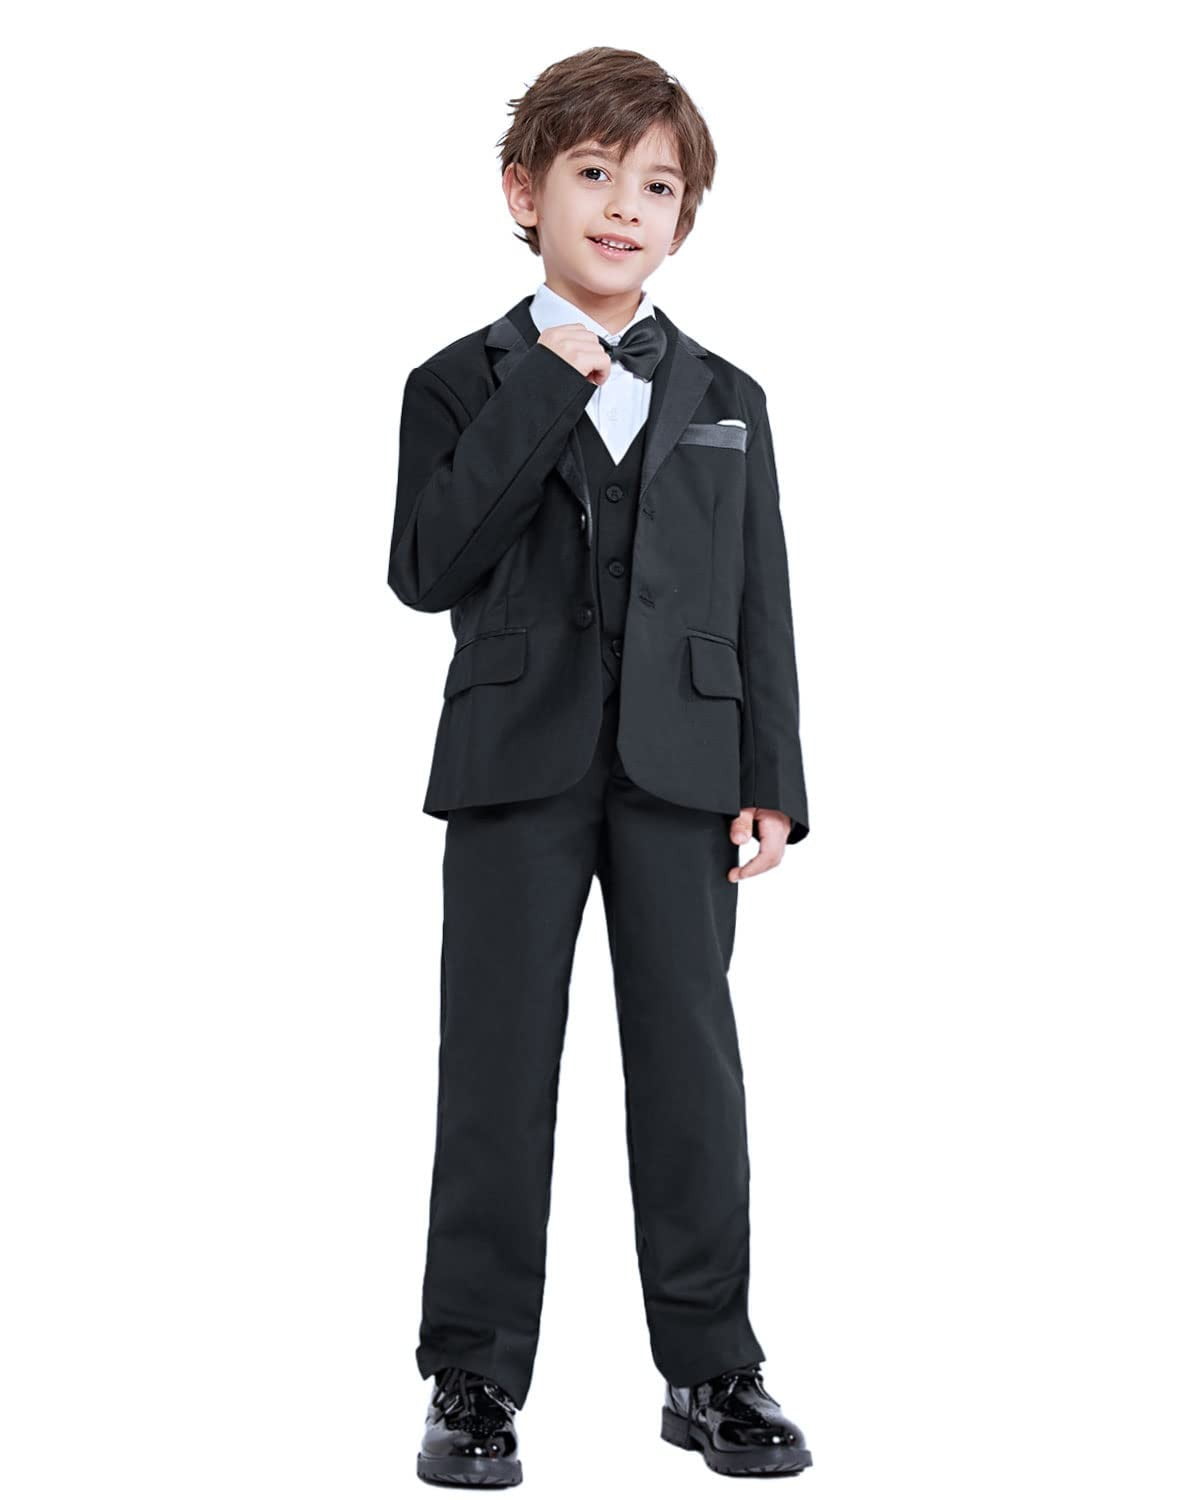 LOLANTA Kids Tuxedo Suits for Boys Ring Bearer Outfit 5 Piece Set Dress ...